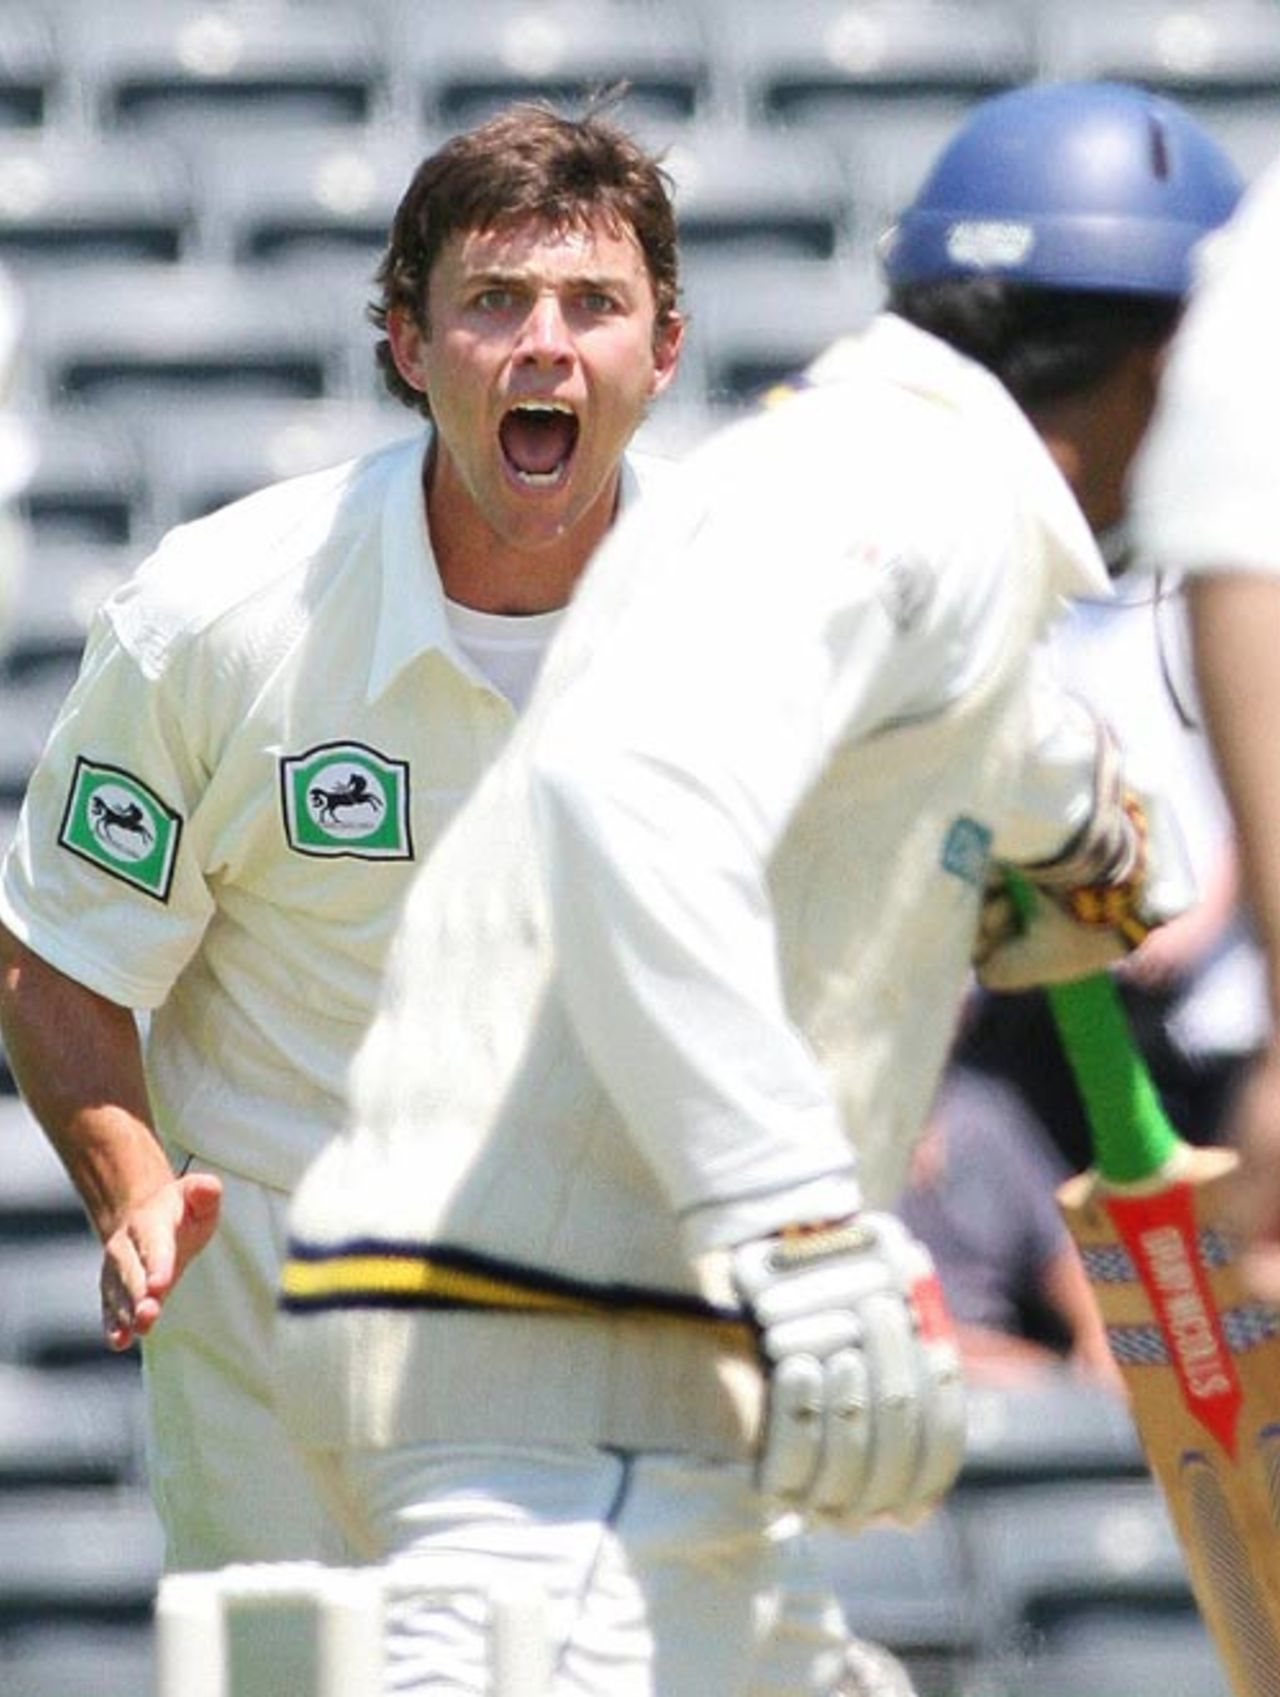 James Franklin reacts after nailing Chamara Kapugedera, New Zealand v Sri Lanka, 1st Test, Christchurch, 1st day